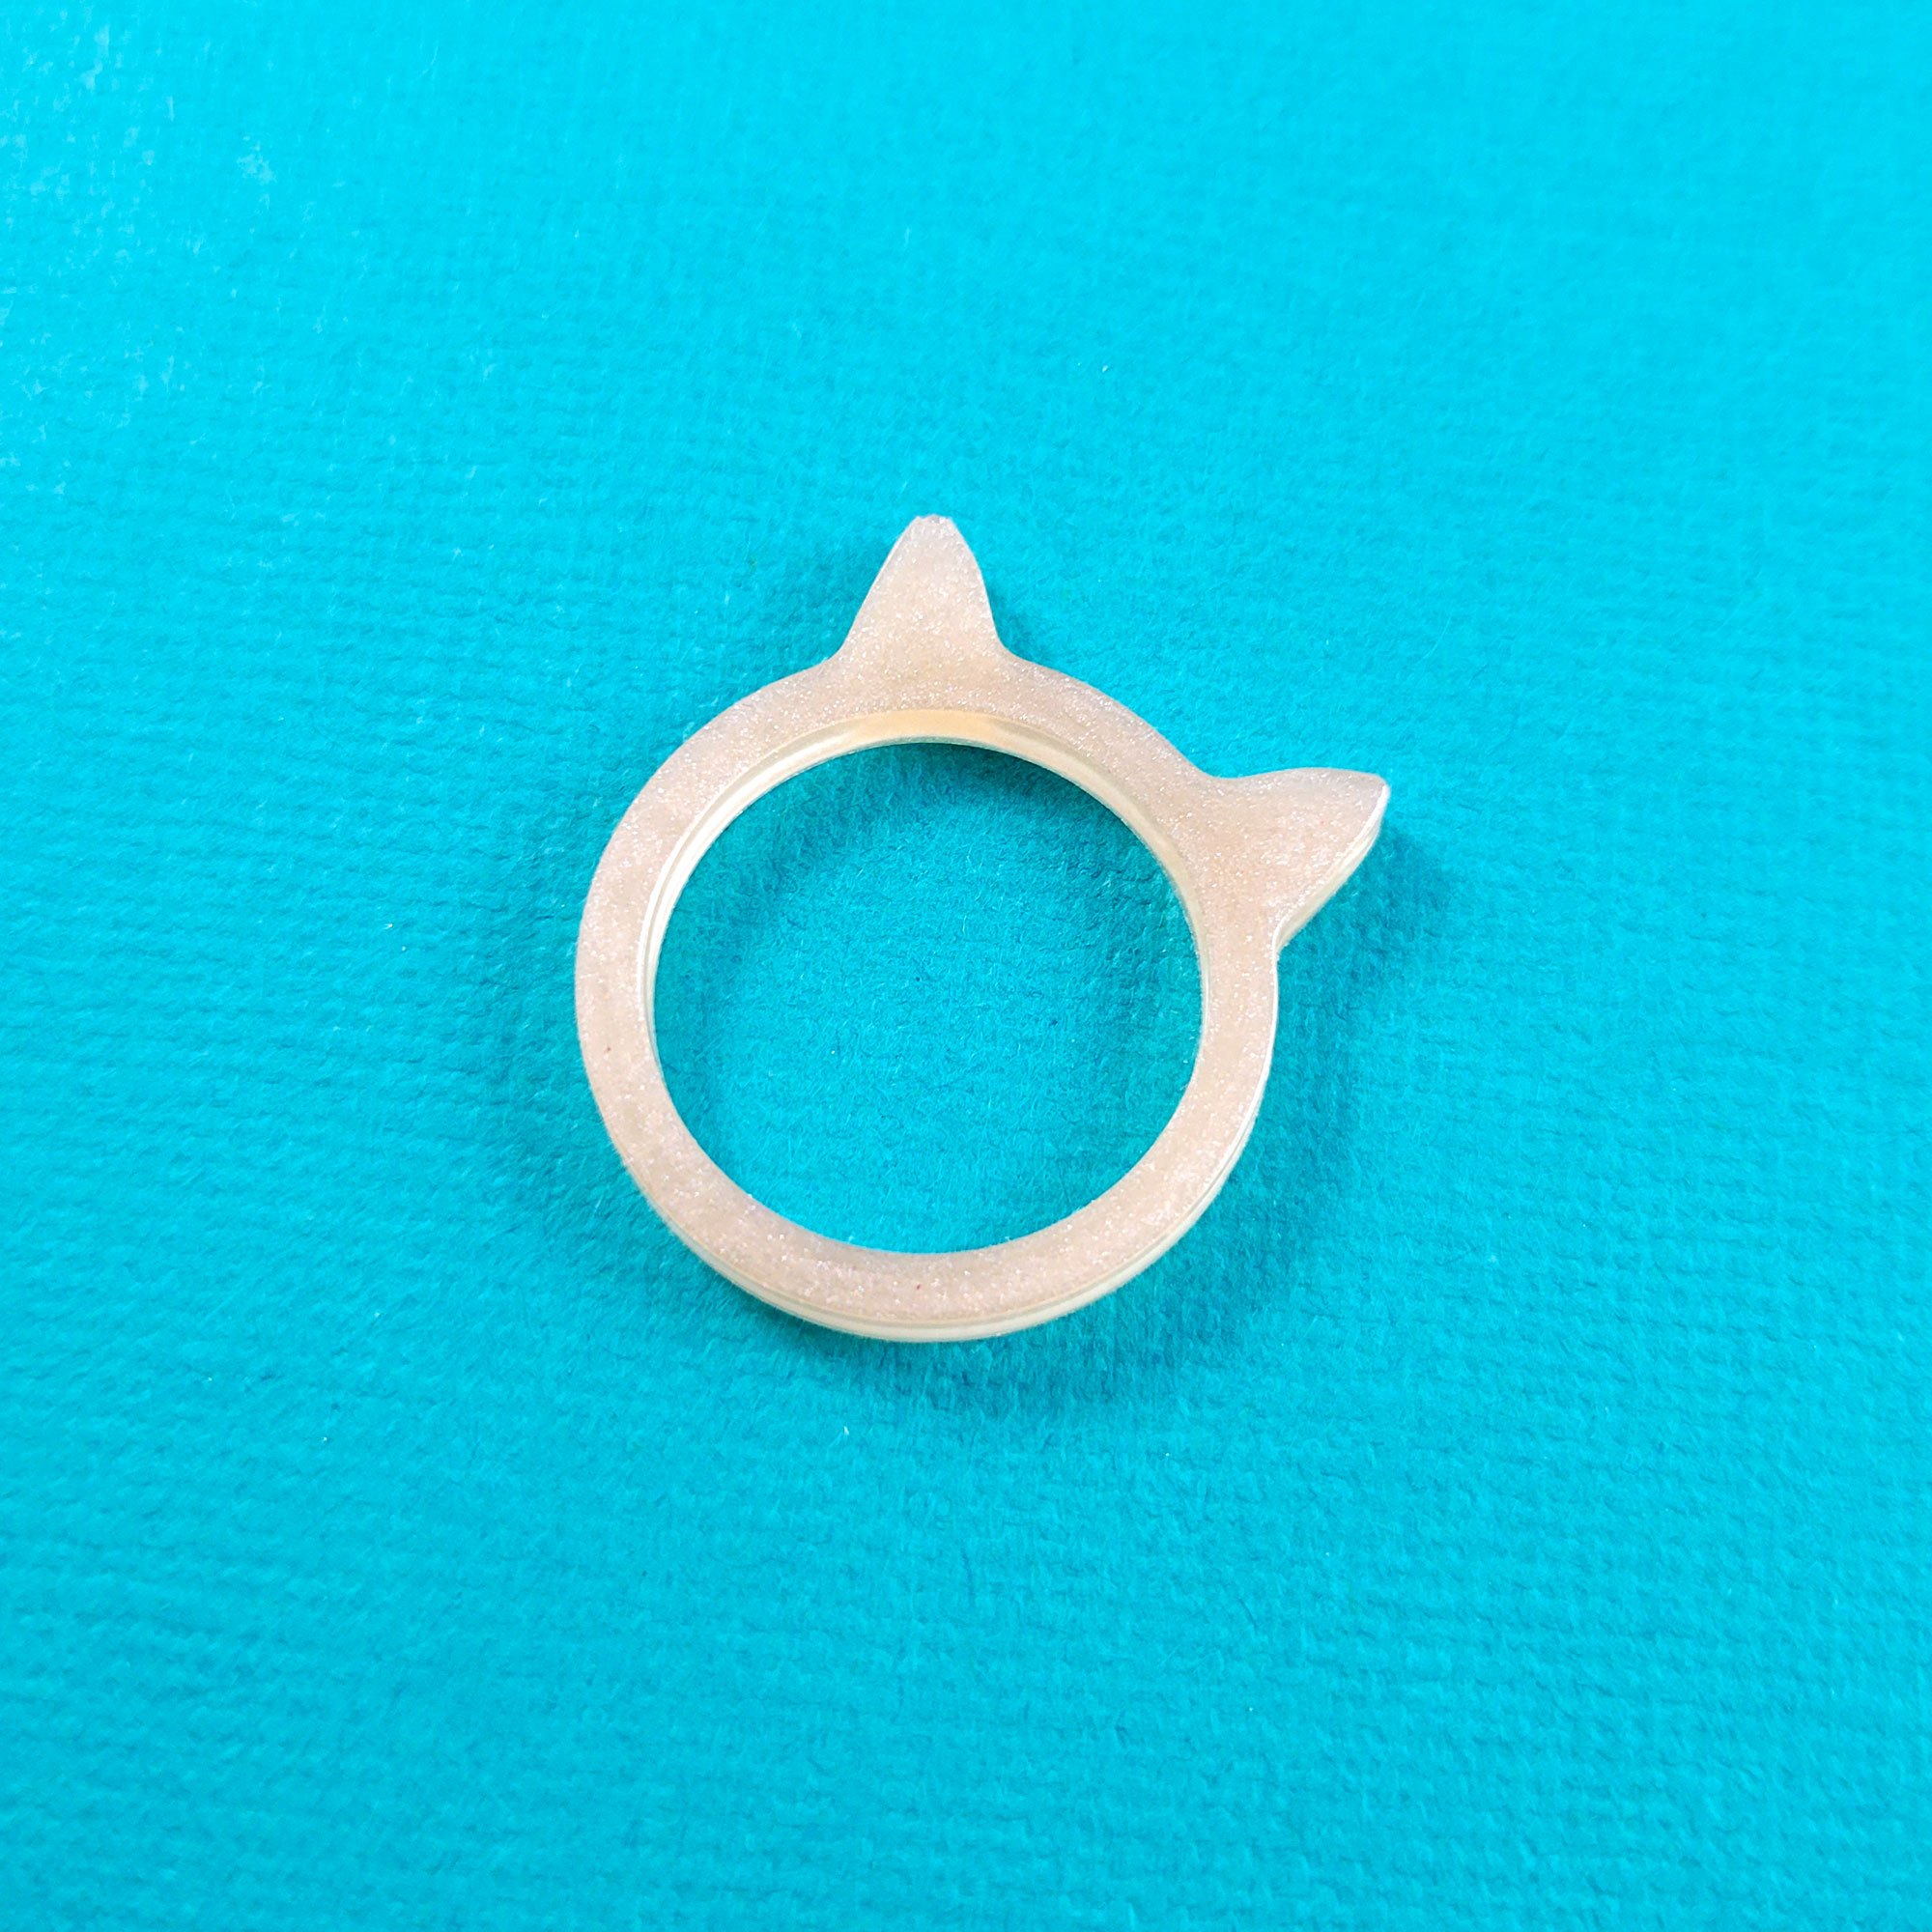 Peach Kawaii Kitty Ring by Wilde Designs